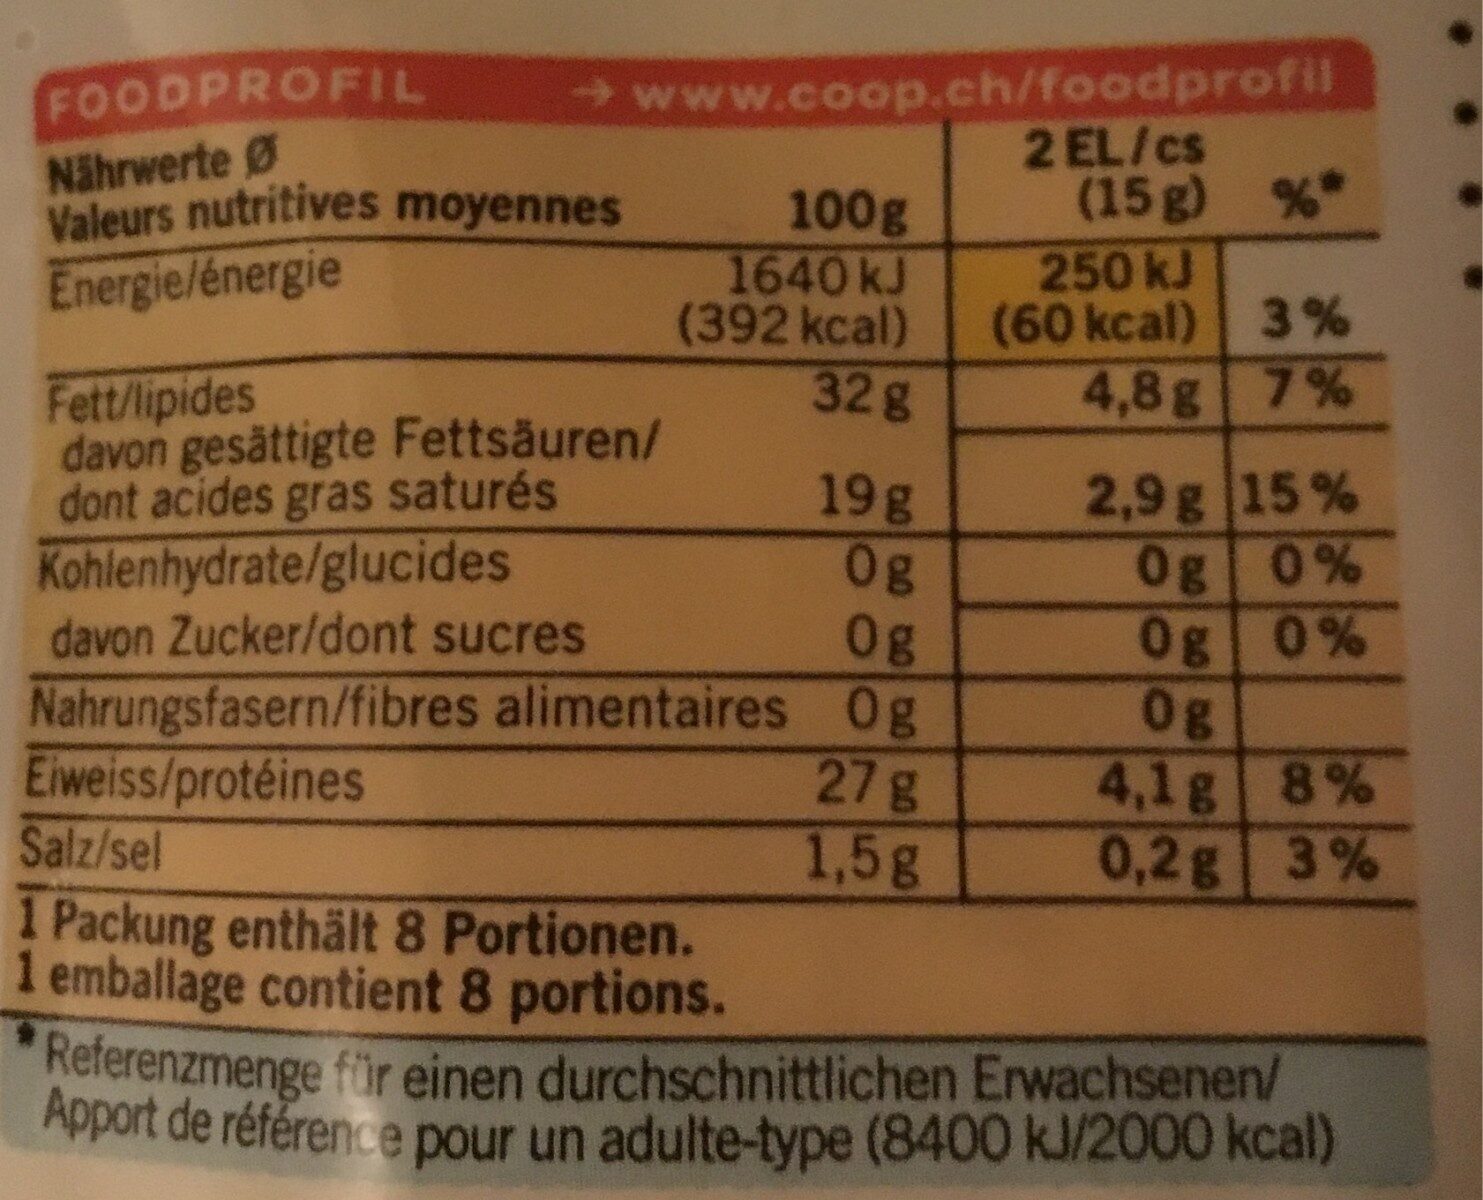 Le gruyère switzerland - Nutrition facts - fr